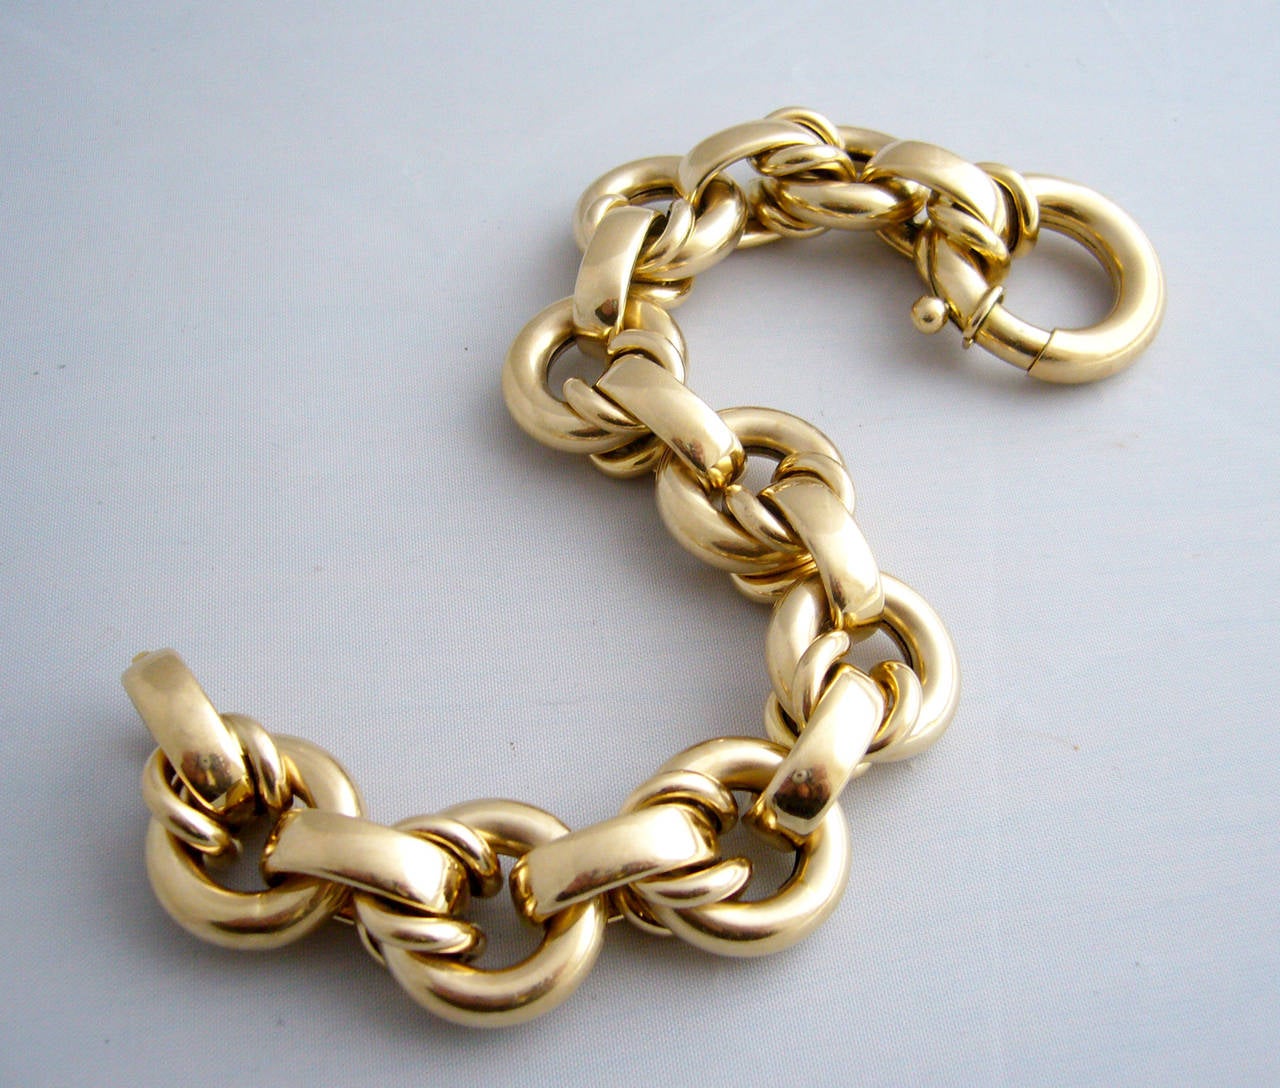 An Italian. 14k hollow yellow gold chain bracelet circa 1970's.  Bracelet measures 8 1/2